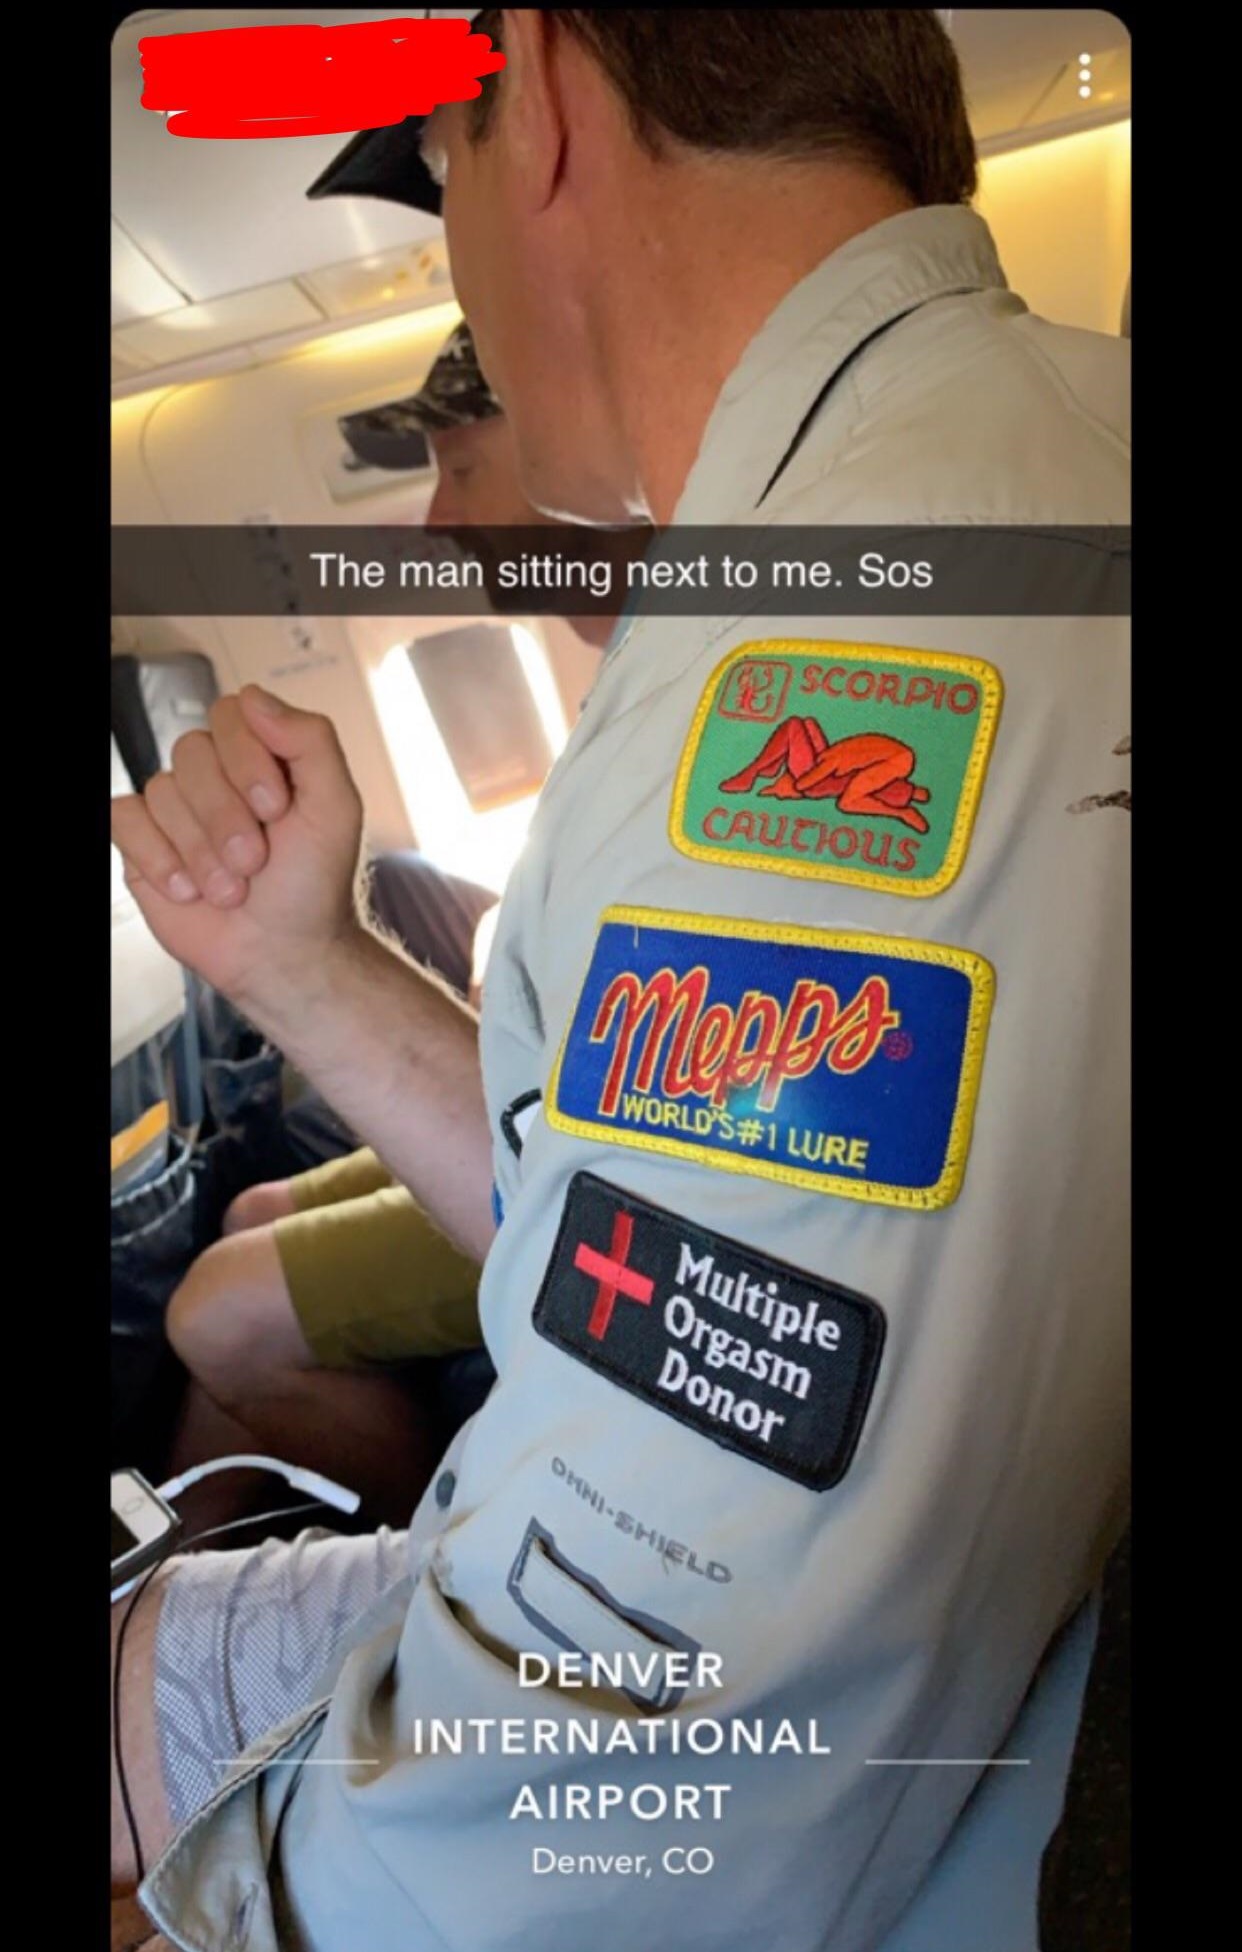 The man sitting next to me. Sos 37 Scorpio Caucious Mond Uworld'S Lure Multiple Orgasm Donor OmniShield Denver International Airport Denver, Co